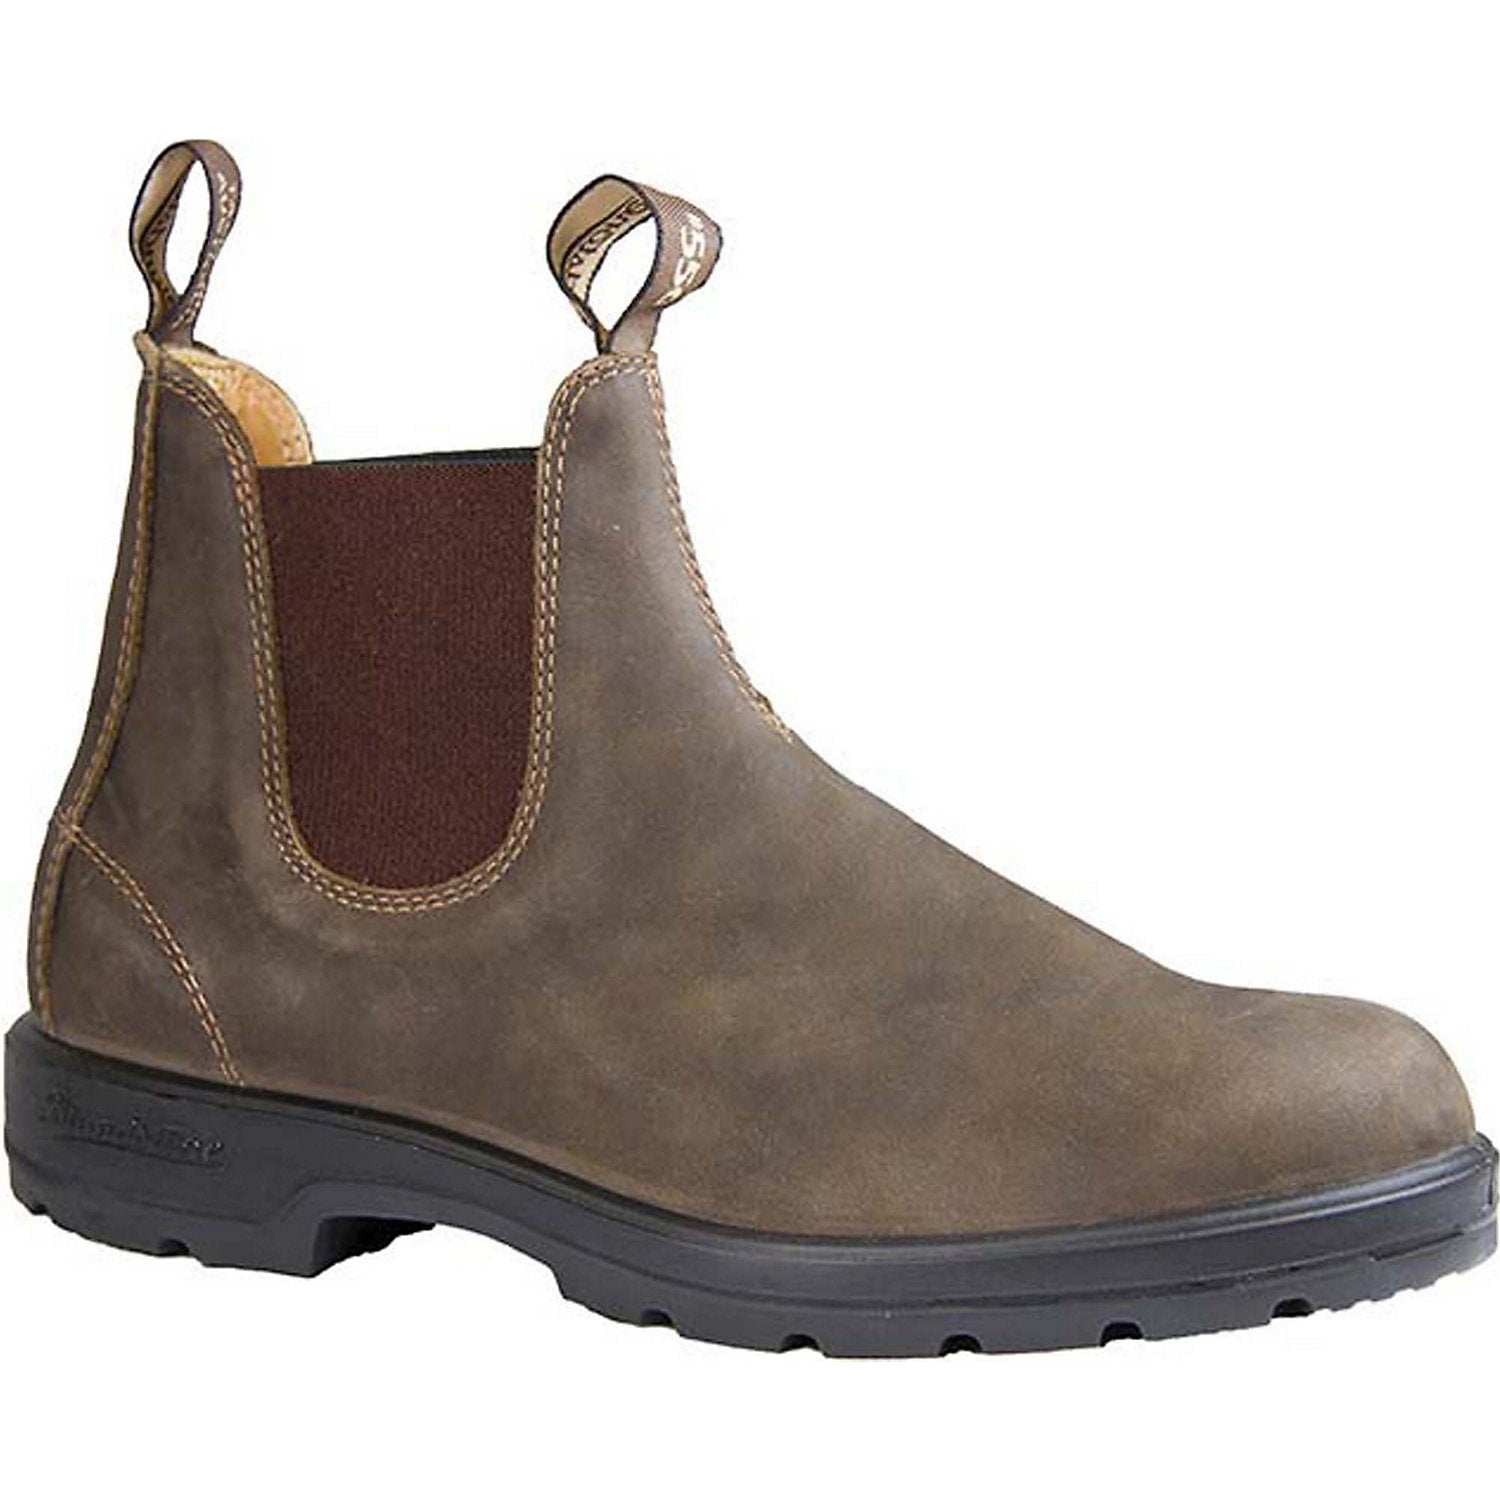 Blundstone 585 Boot